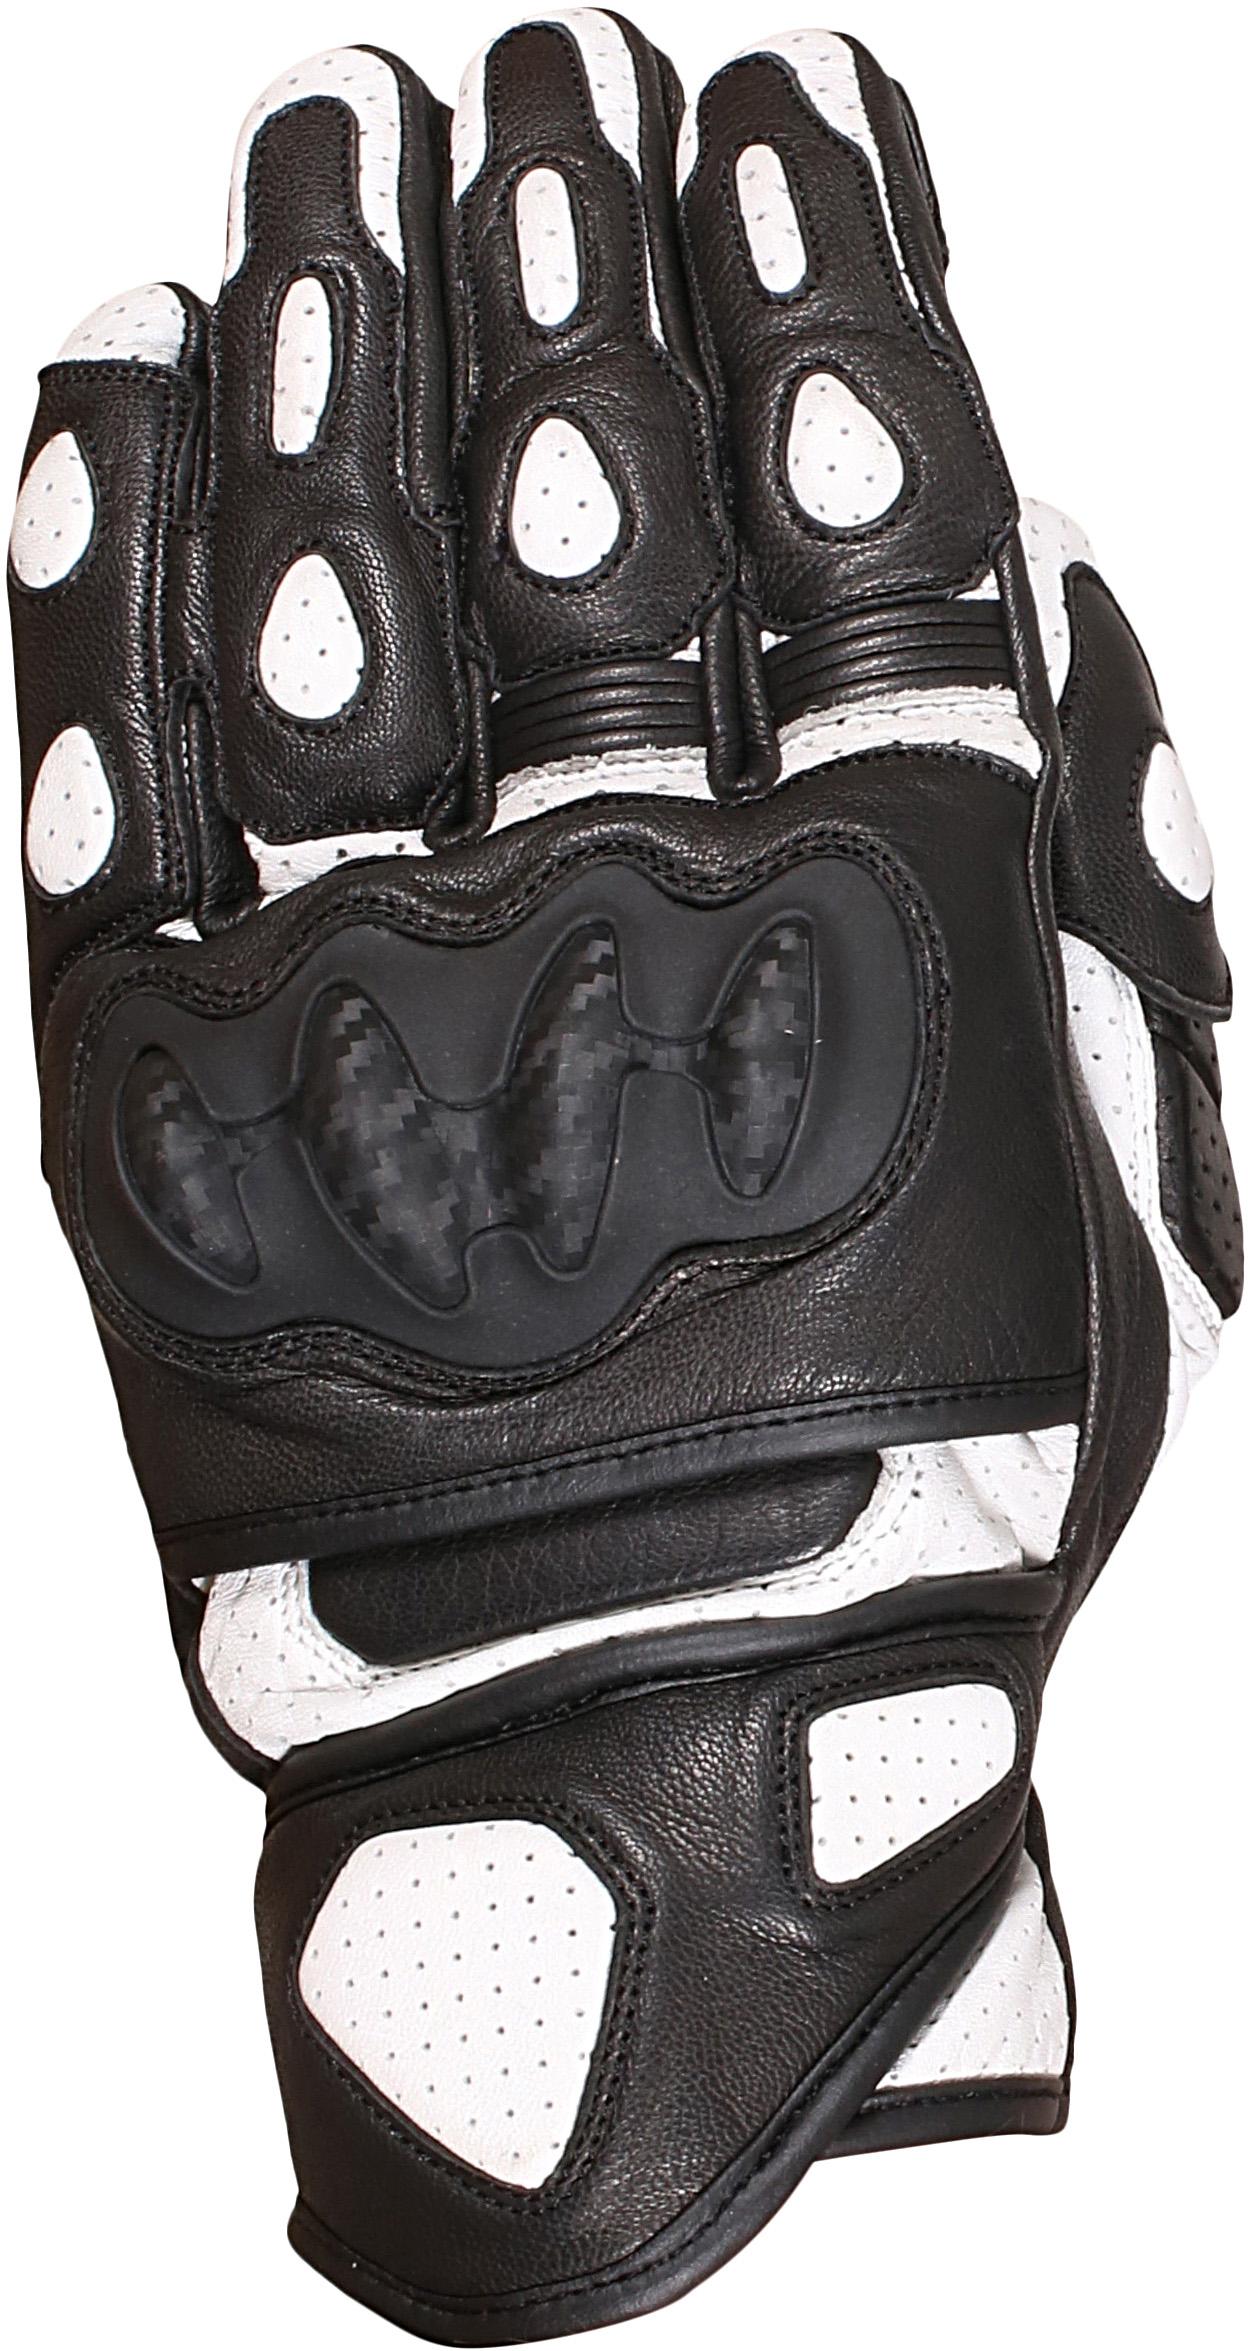 Weise Apex Motorcycle Gloves - Black/White, M